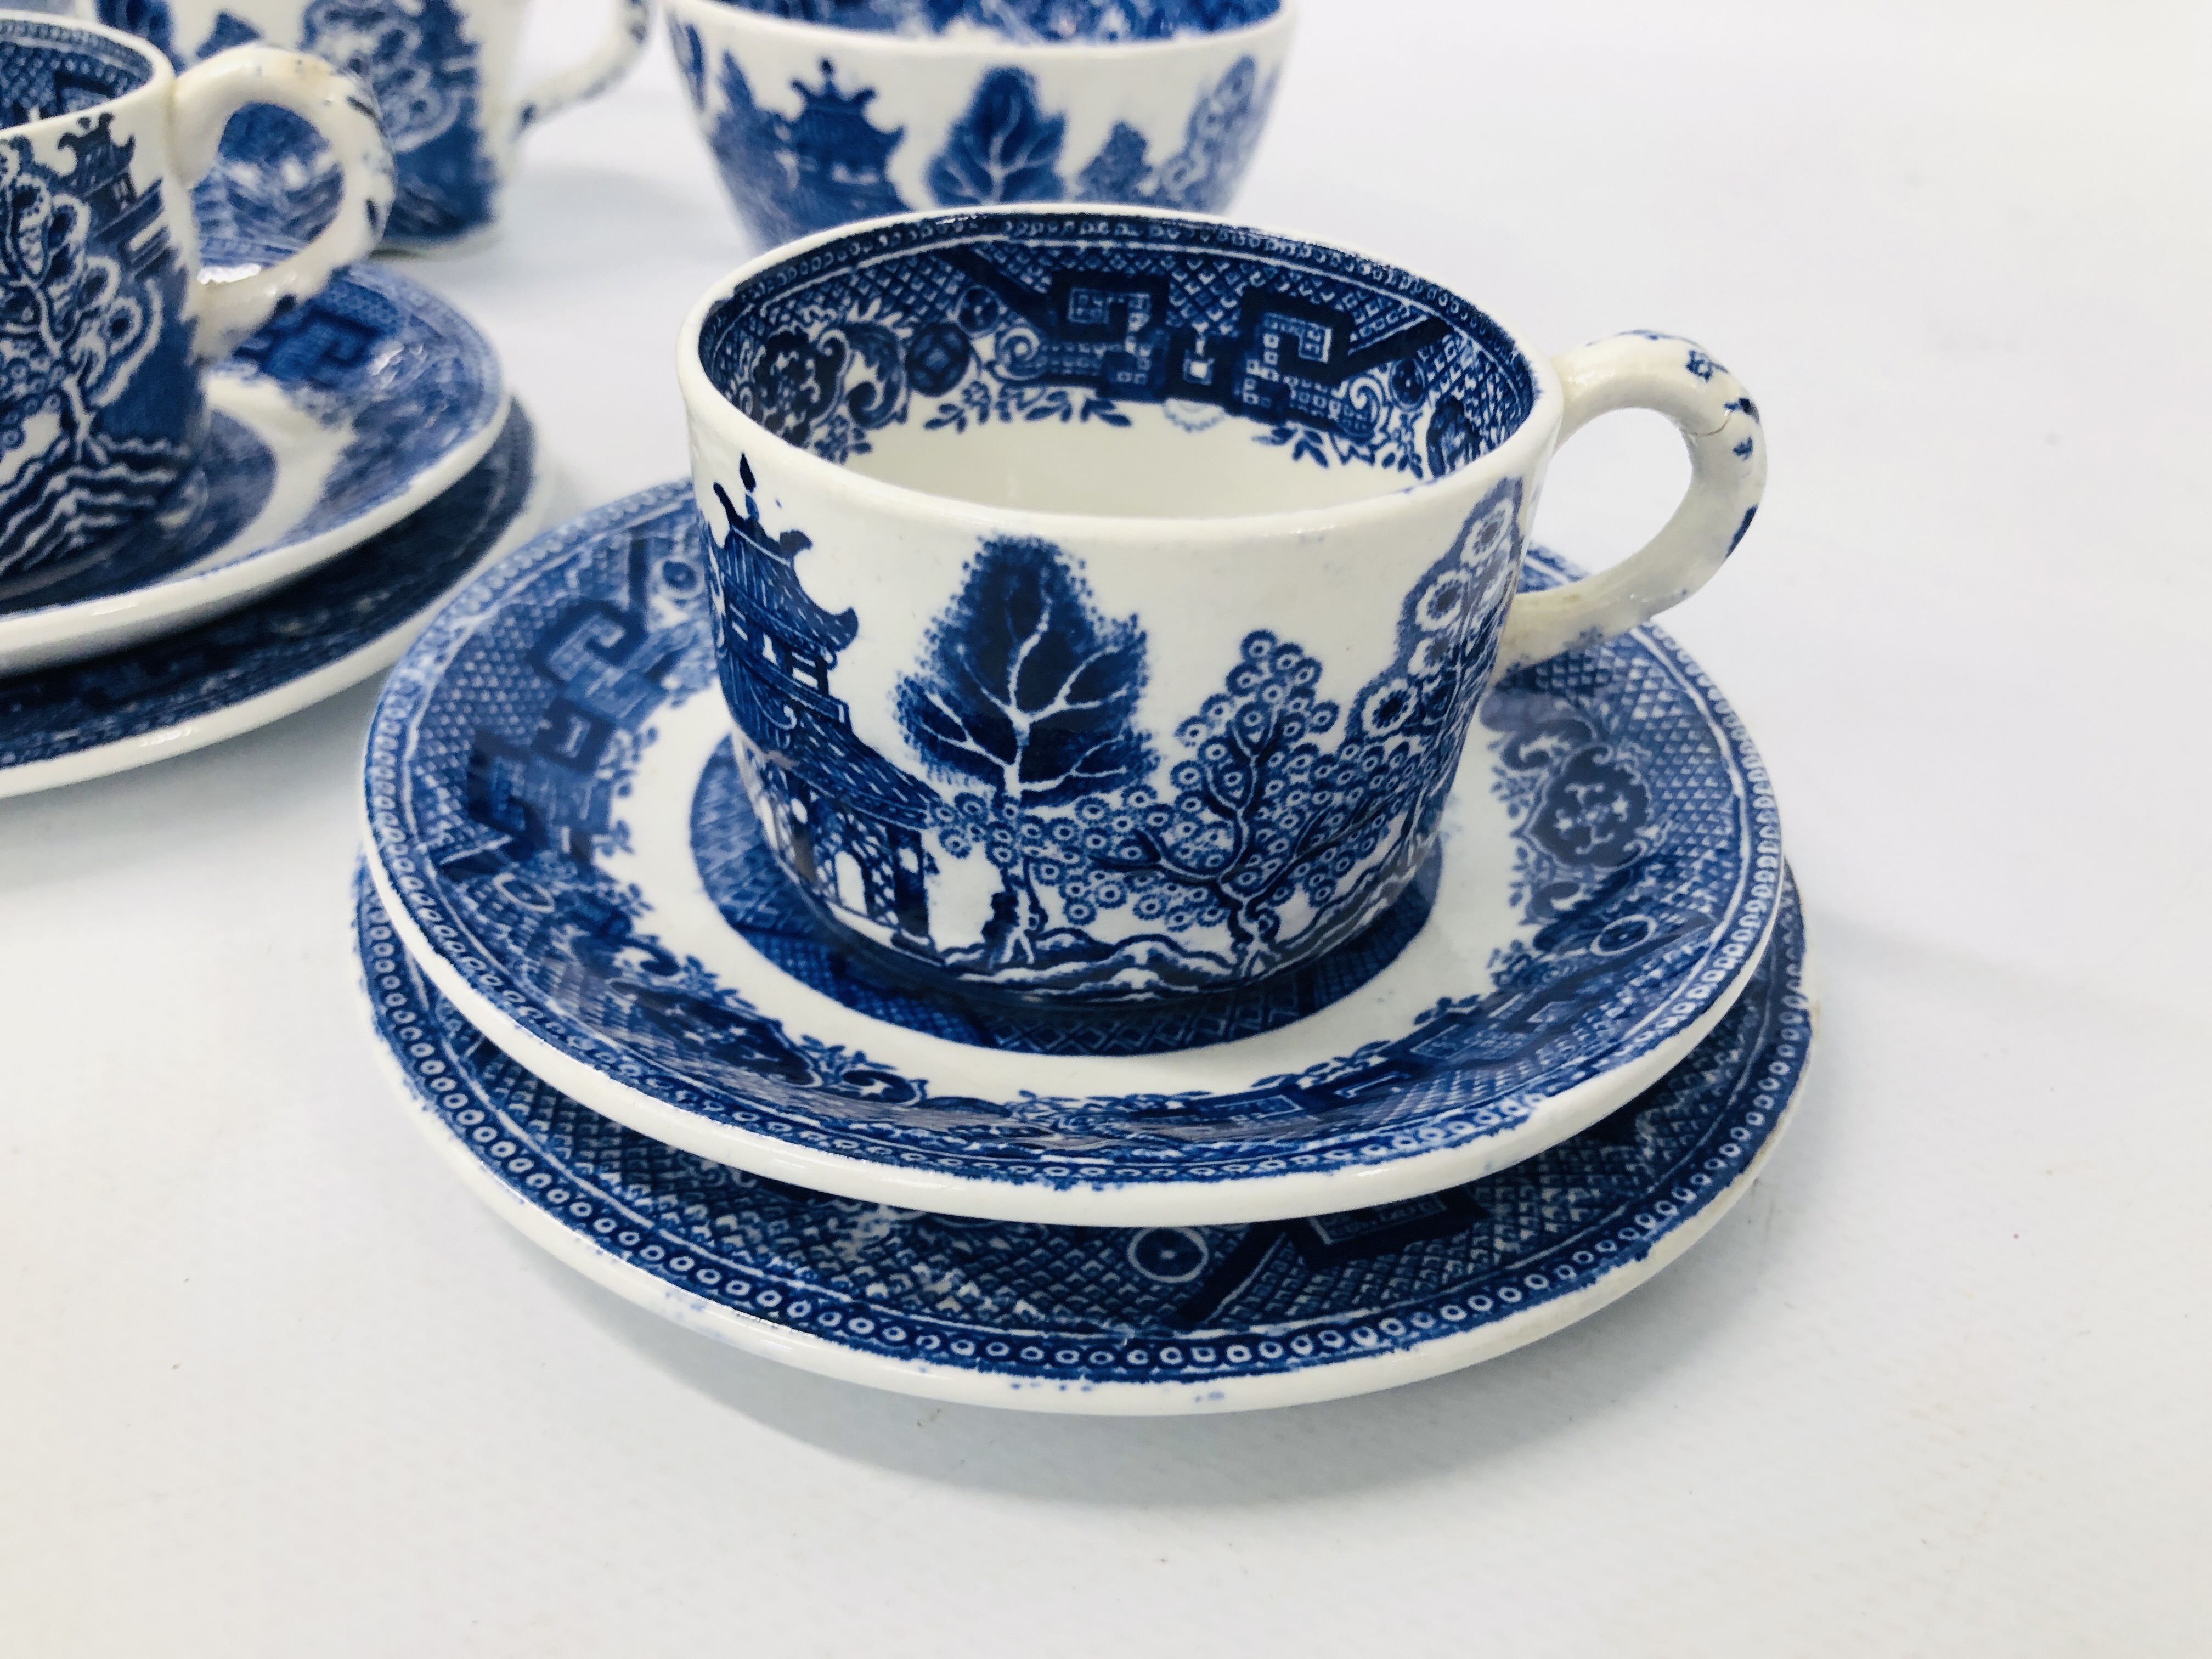 VINTAGE MINATURE 15 PIECE BLUE AND WHITE WILLOW PATTERN TEA SET MARKED RIDGWAY 1832 SEMI CHINA. - Image 2 of 8